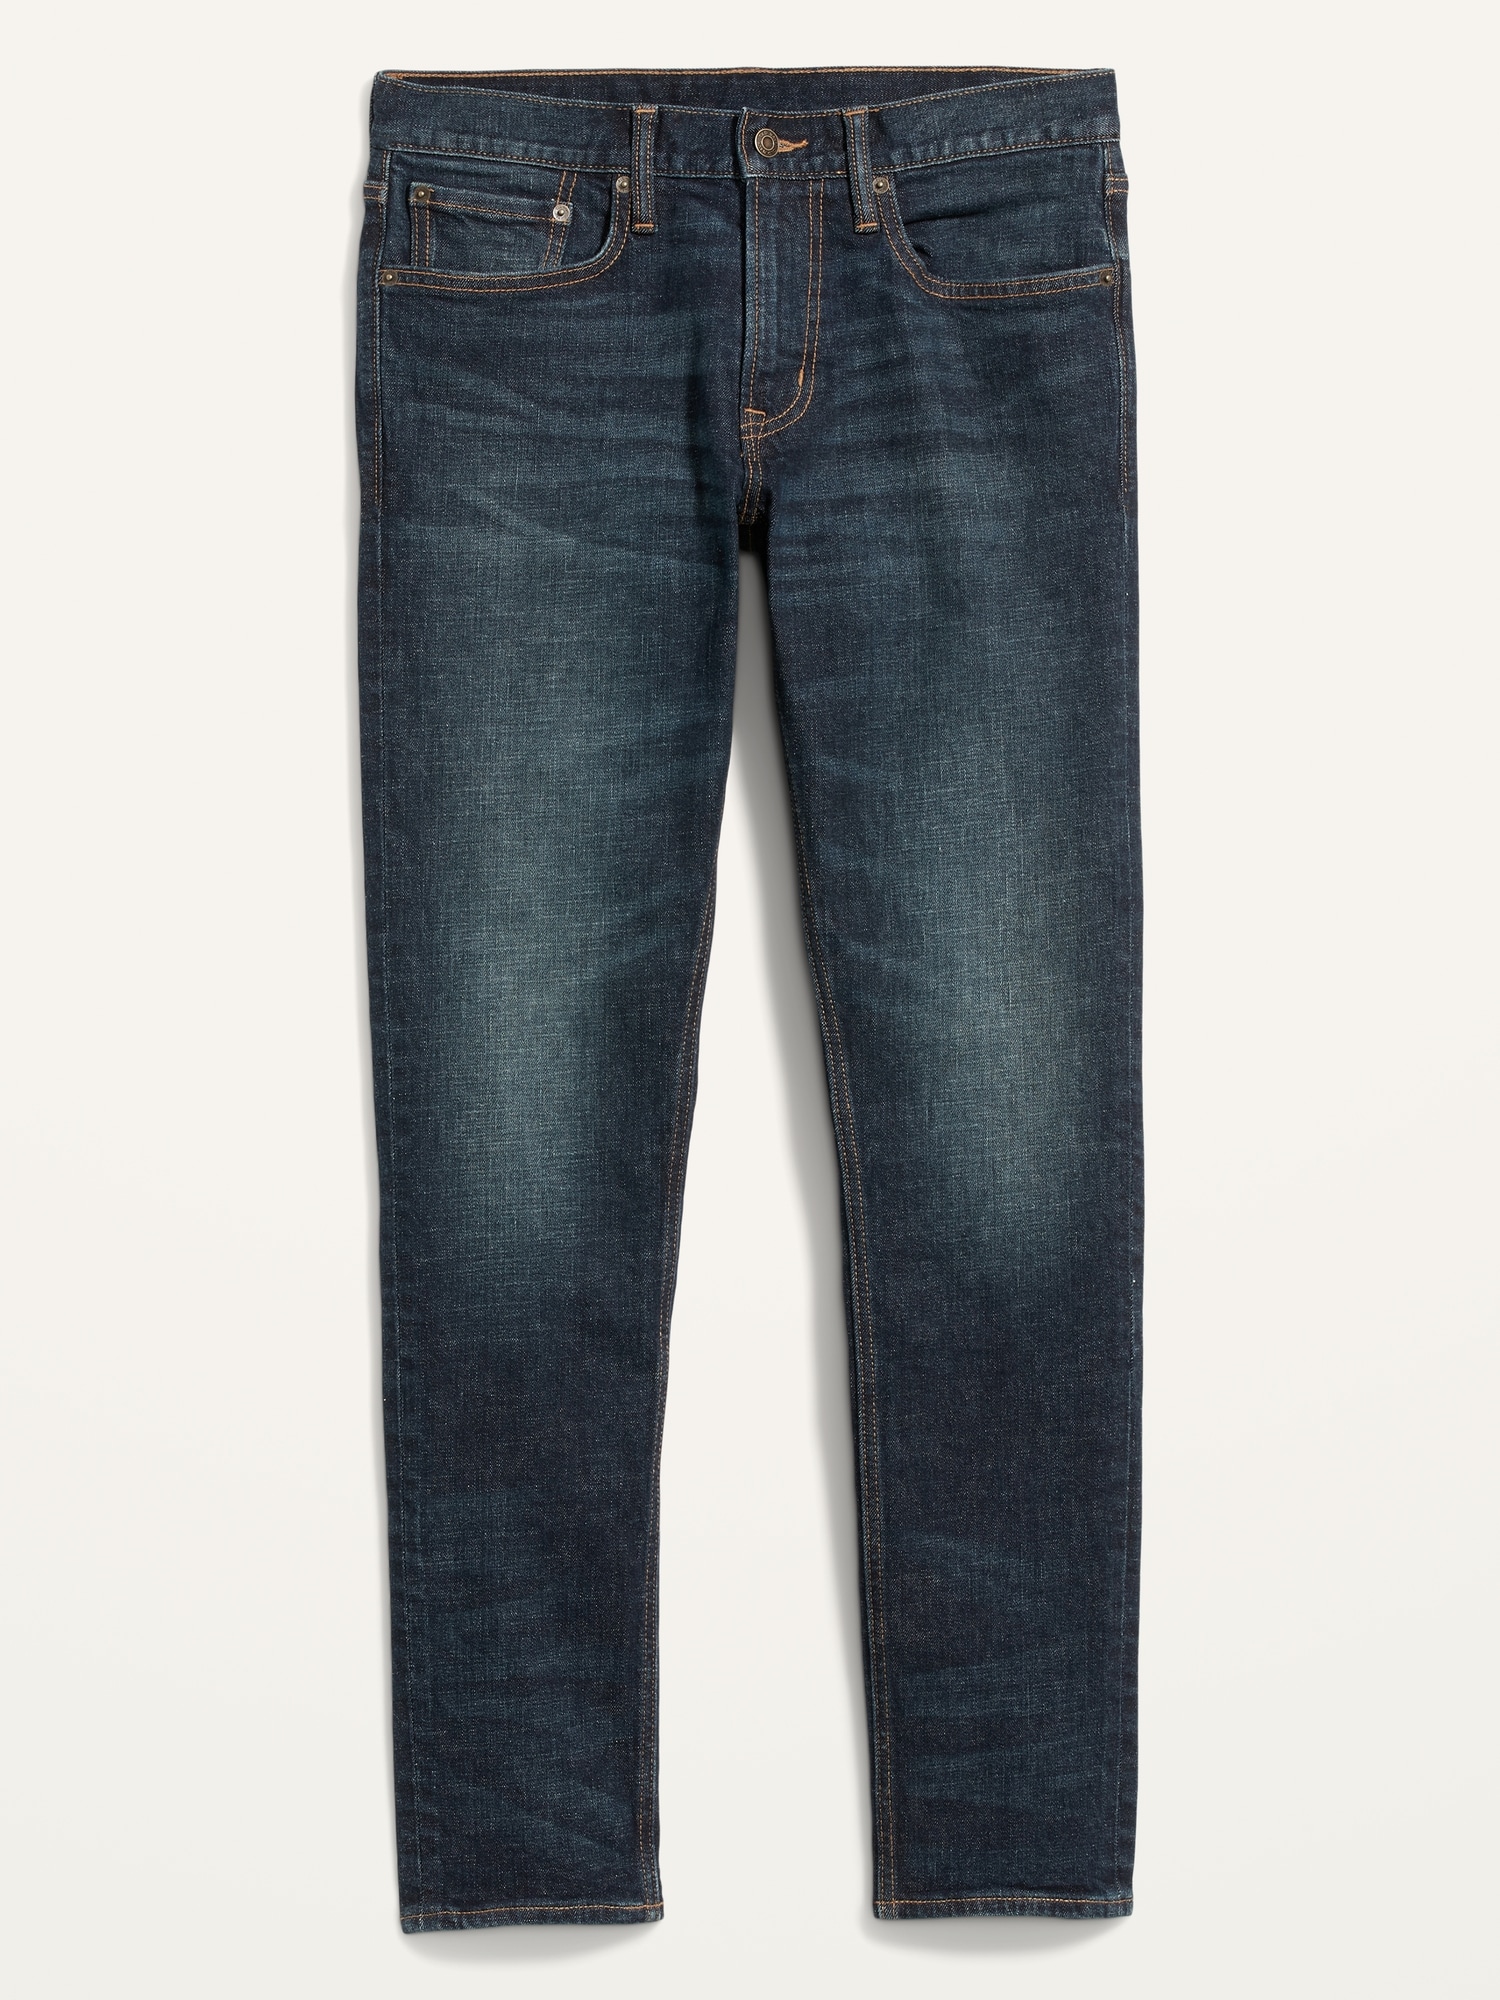 Skinny Built-In Flex Dark-Wash Jeans